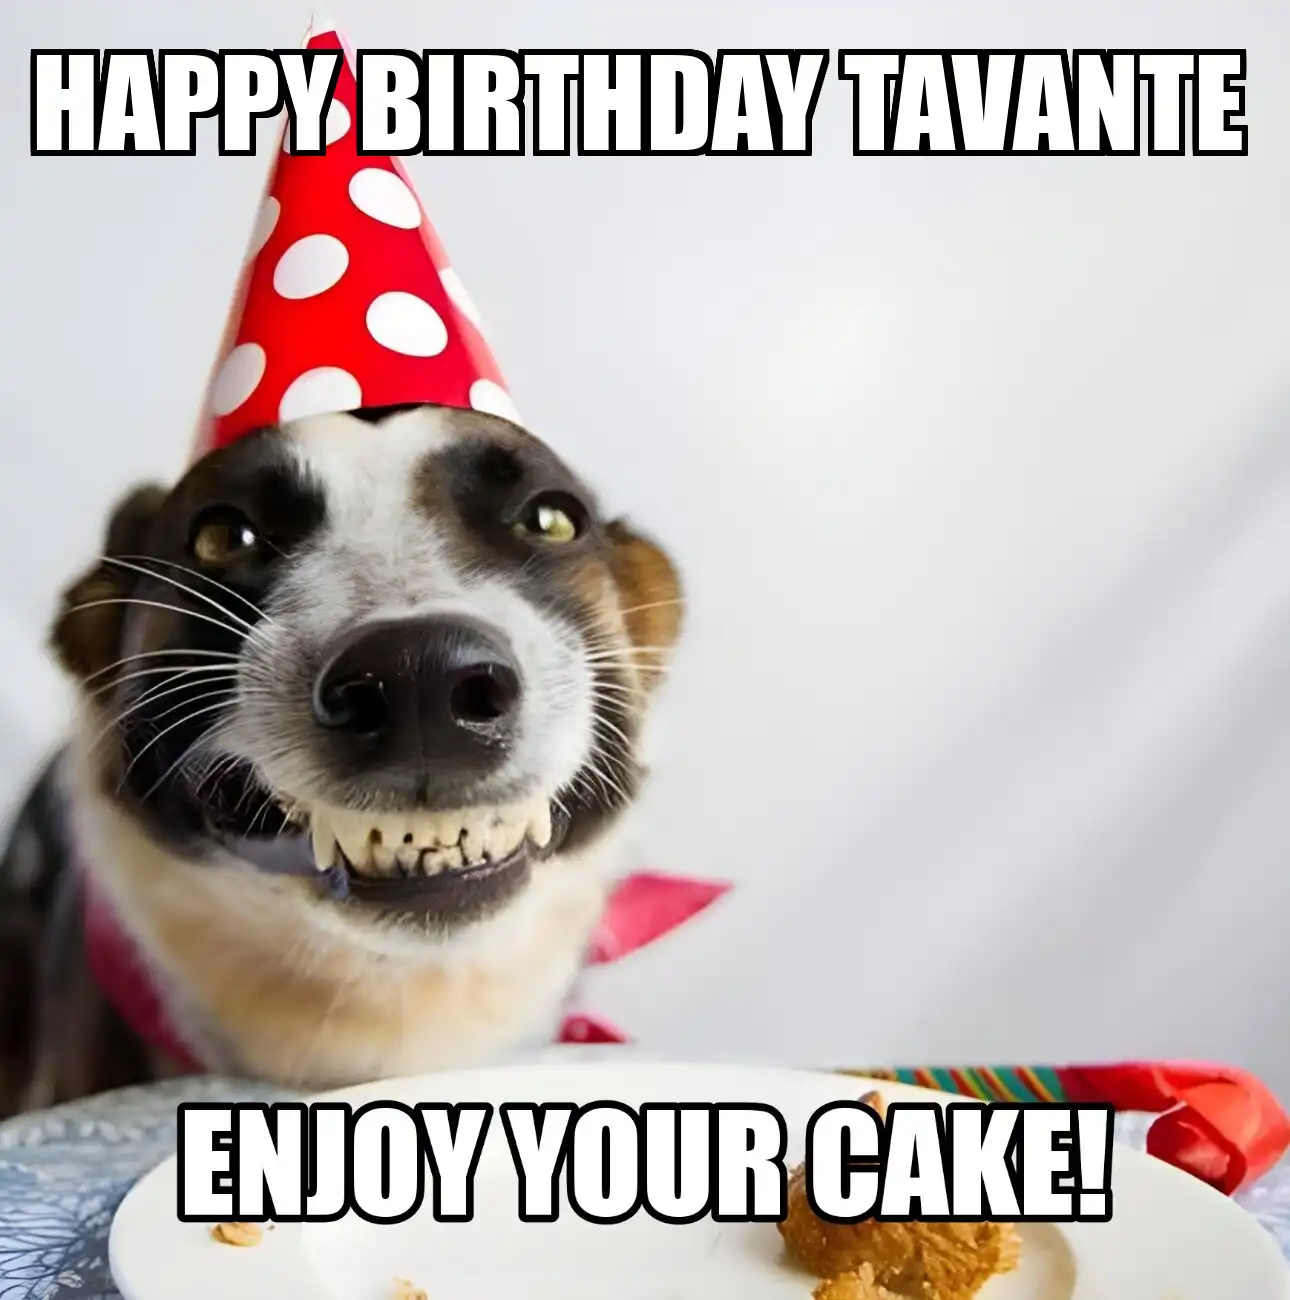 Happy Birthday Tavante Enjoy Your Cake Dog Meme